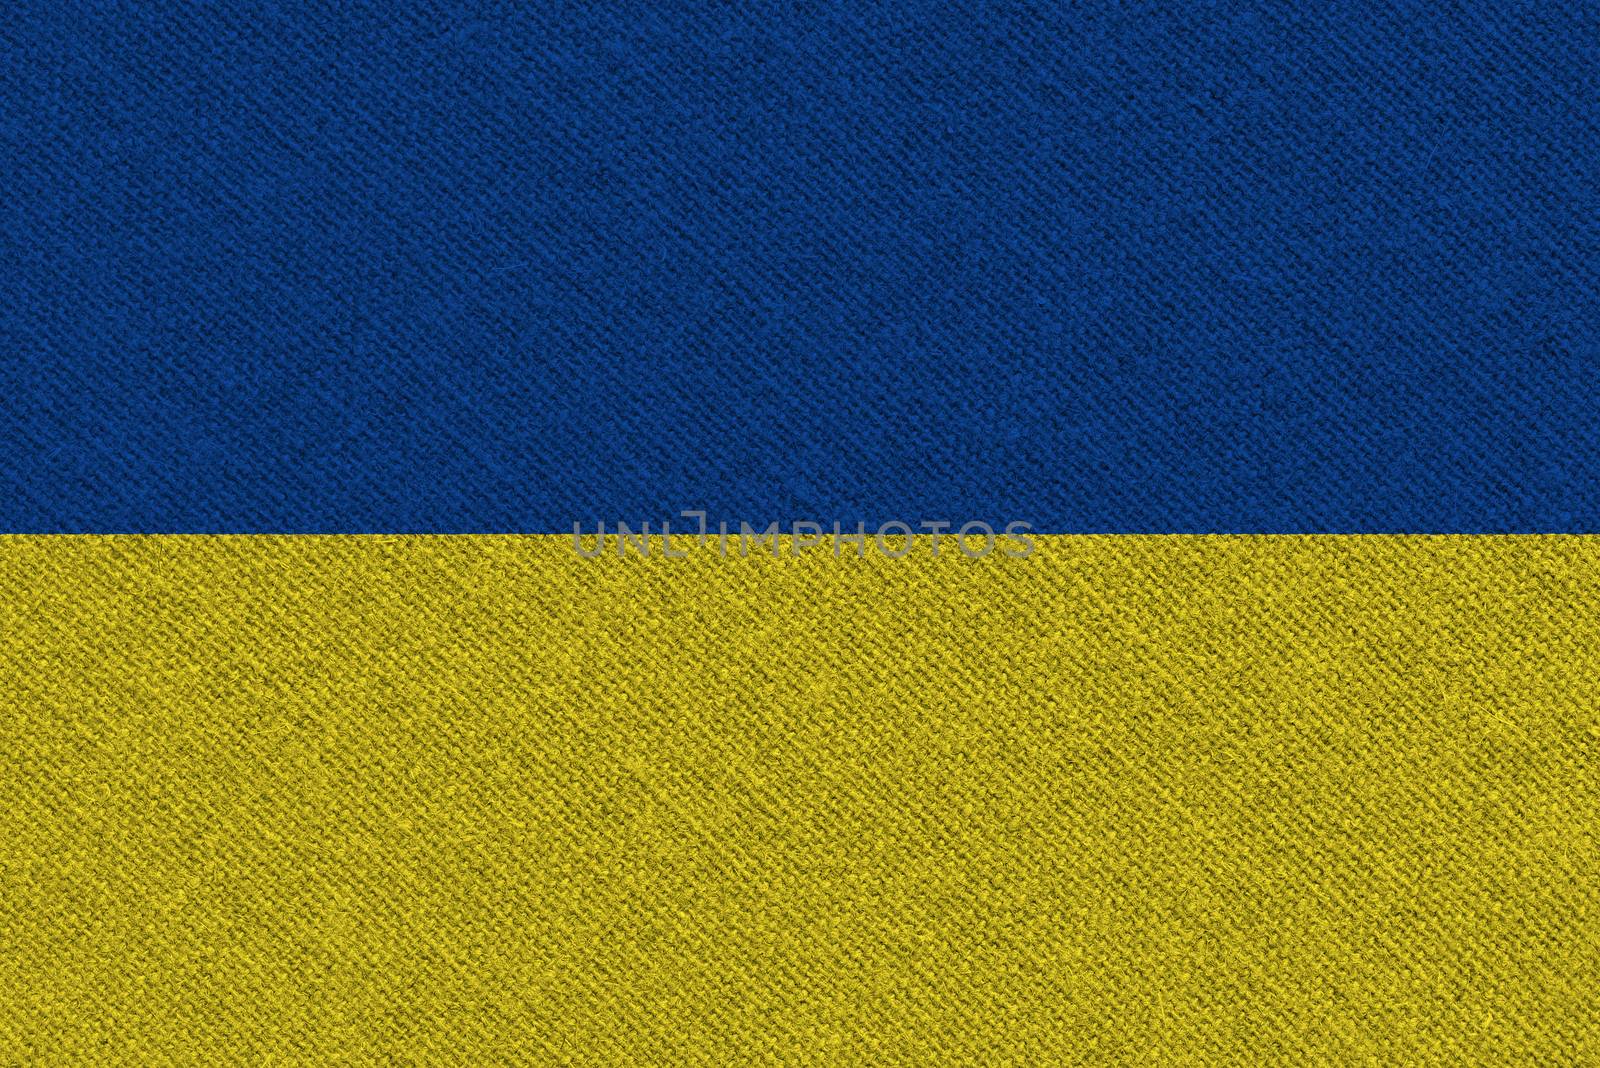 Ukraine fabric flag. Patriotic background. National flag of Ukraine